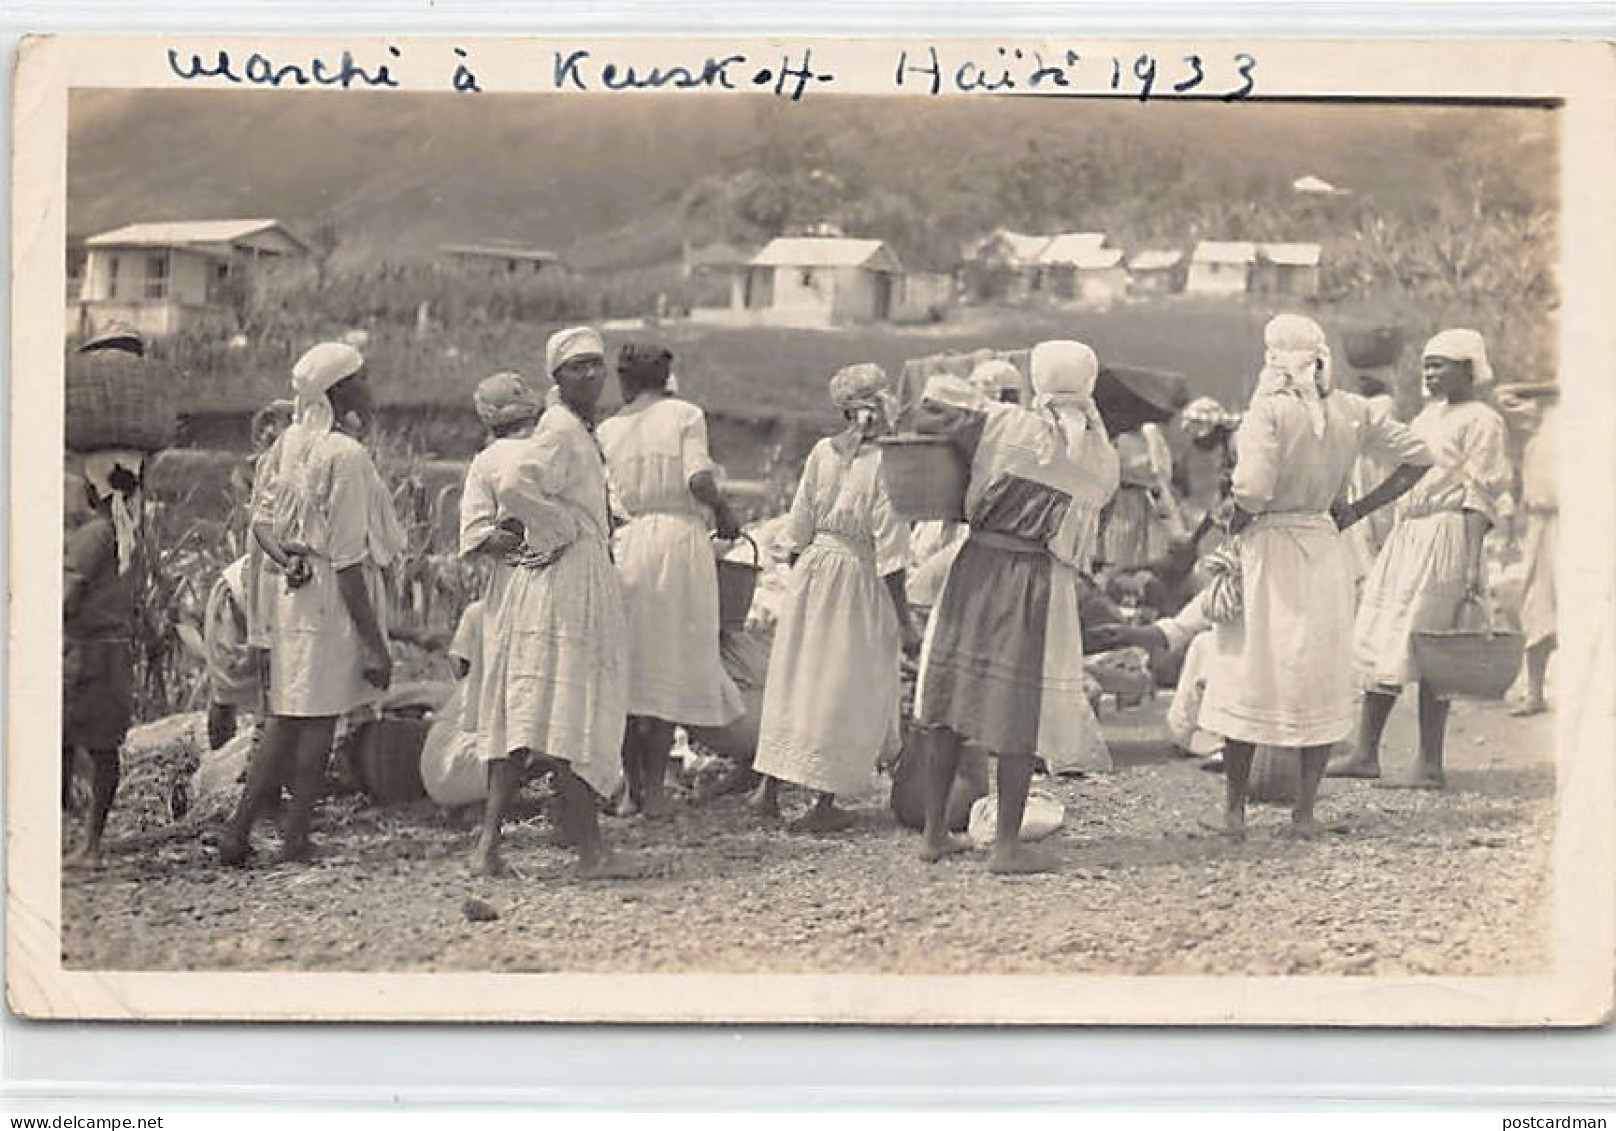 Haiti - KENSCOFF - Market, Year 1933 - PHOTOGRAPH - Publ. Unknown  - Haïti